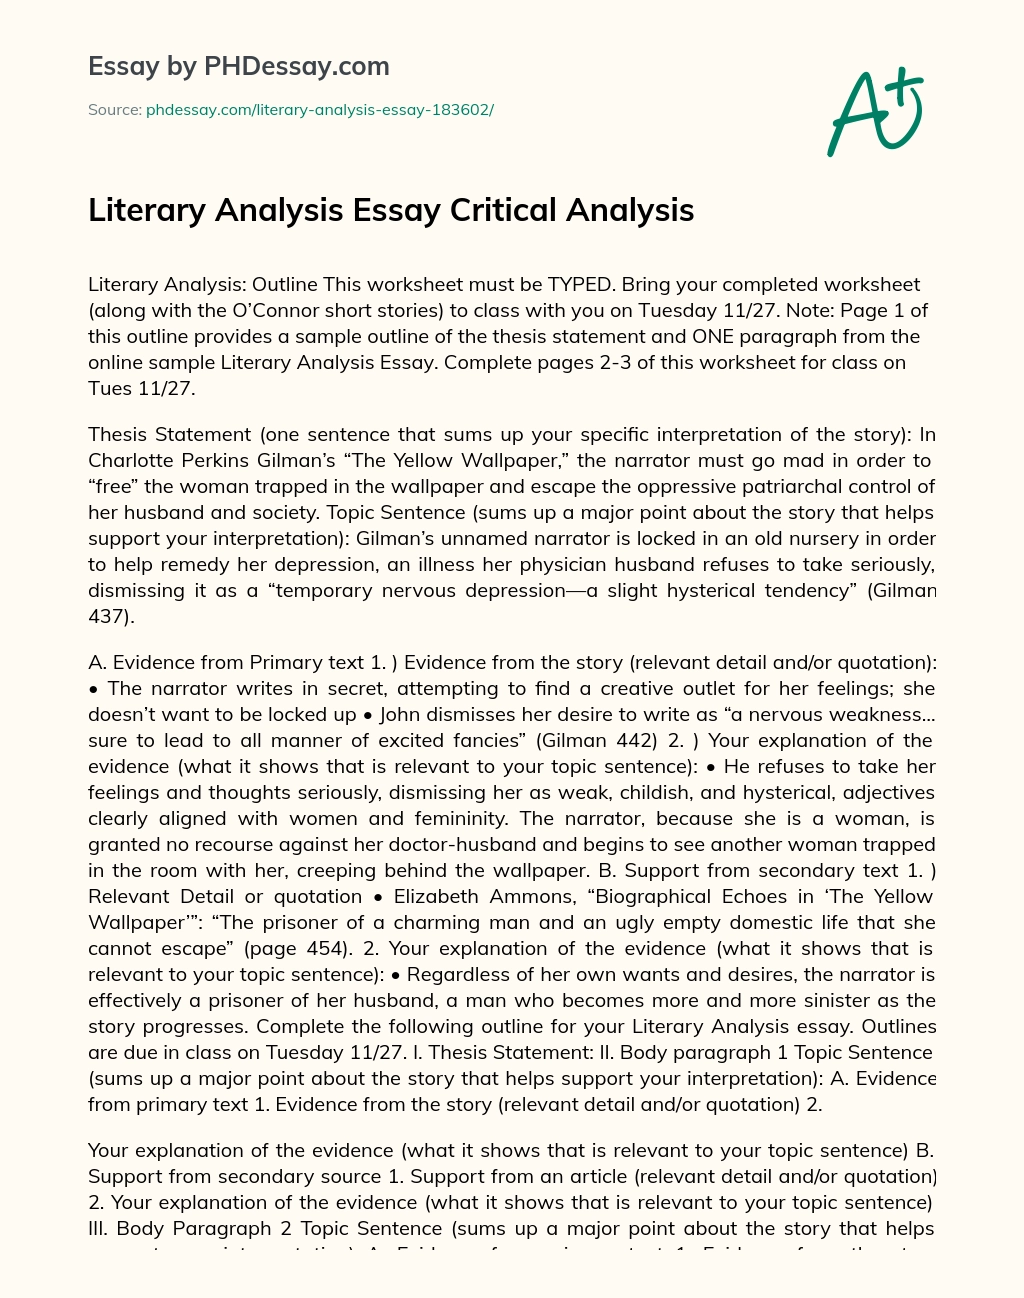 Literary Analysis Essay Critical Analysis essay